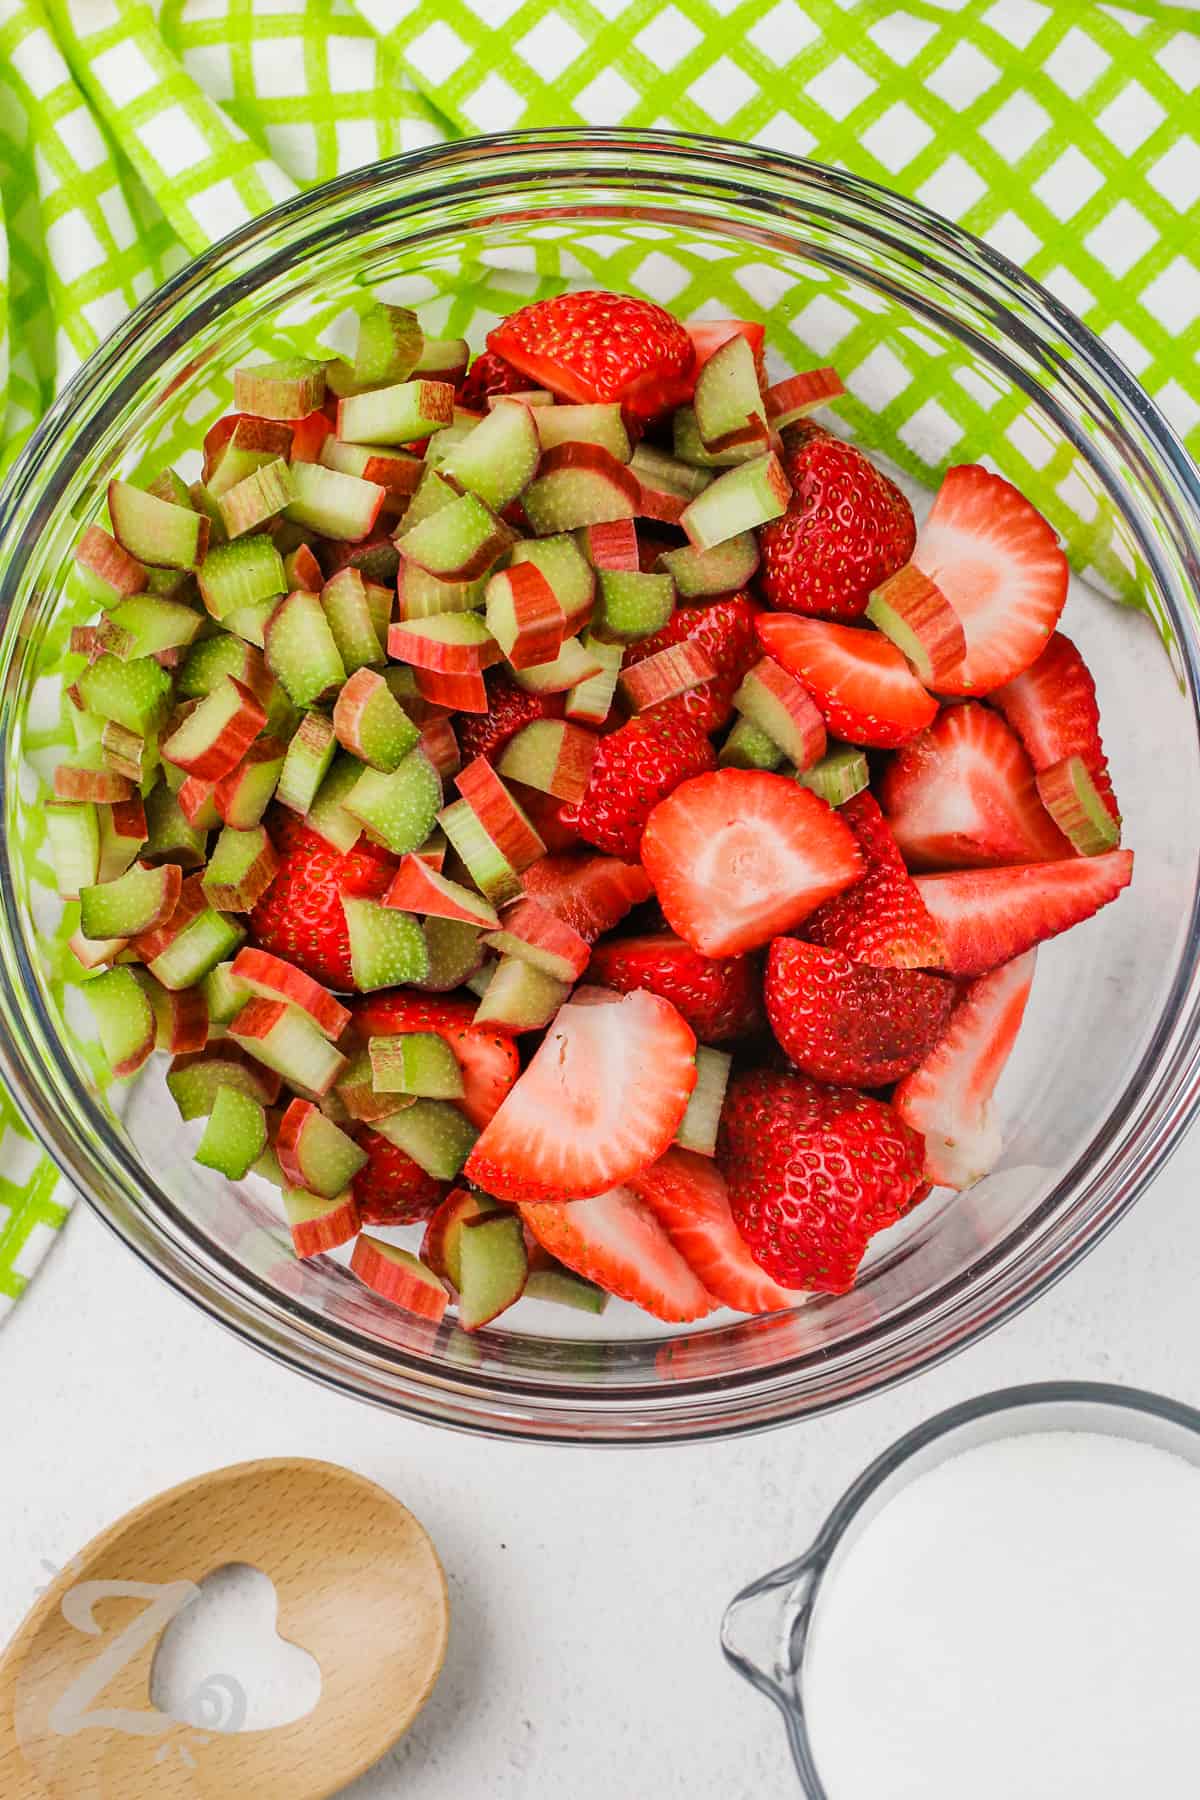 strawberries and rhubarb sliced in a bowl to make Strawberry Rhubarb Jam